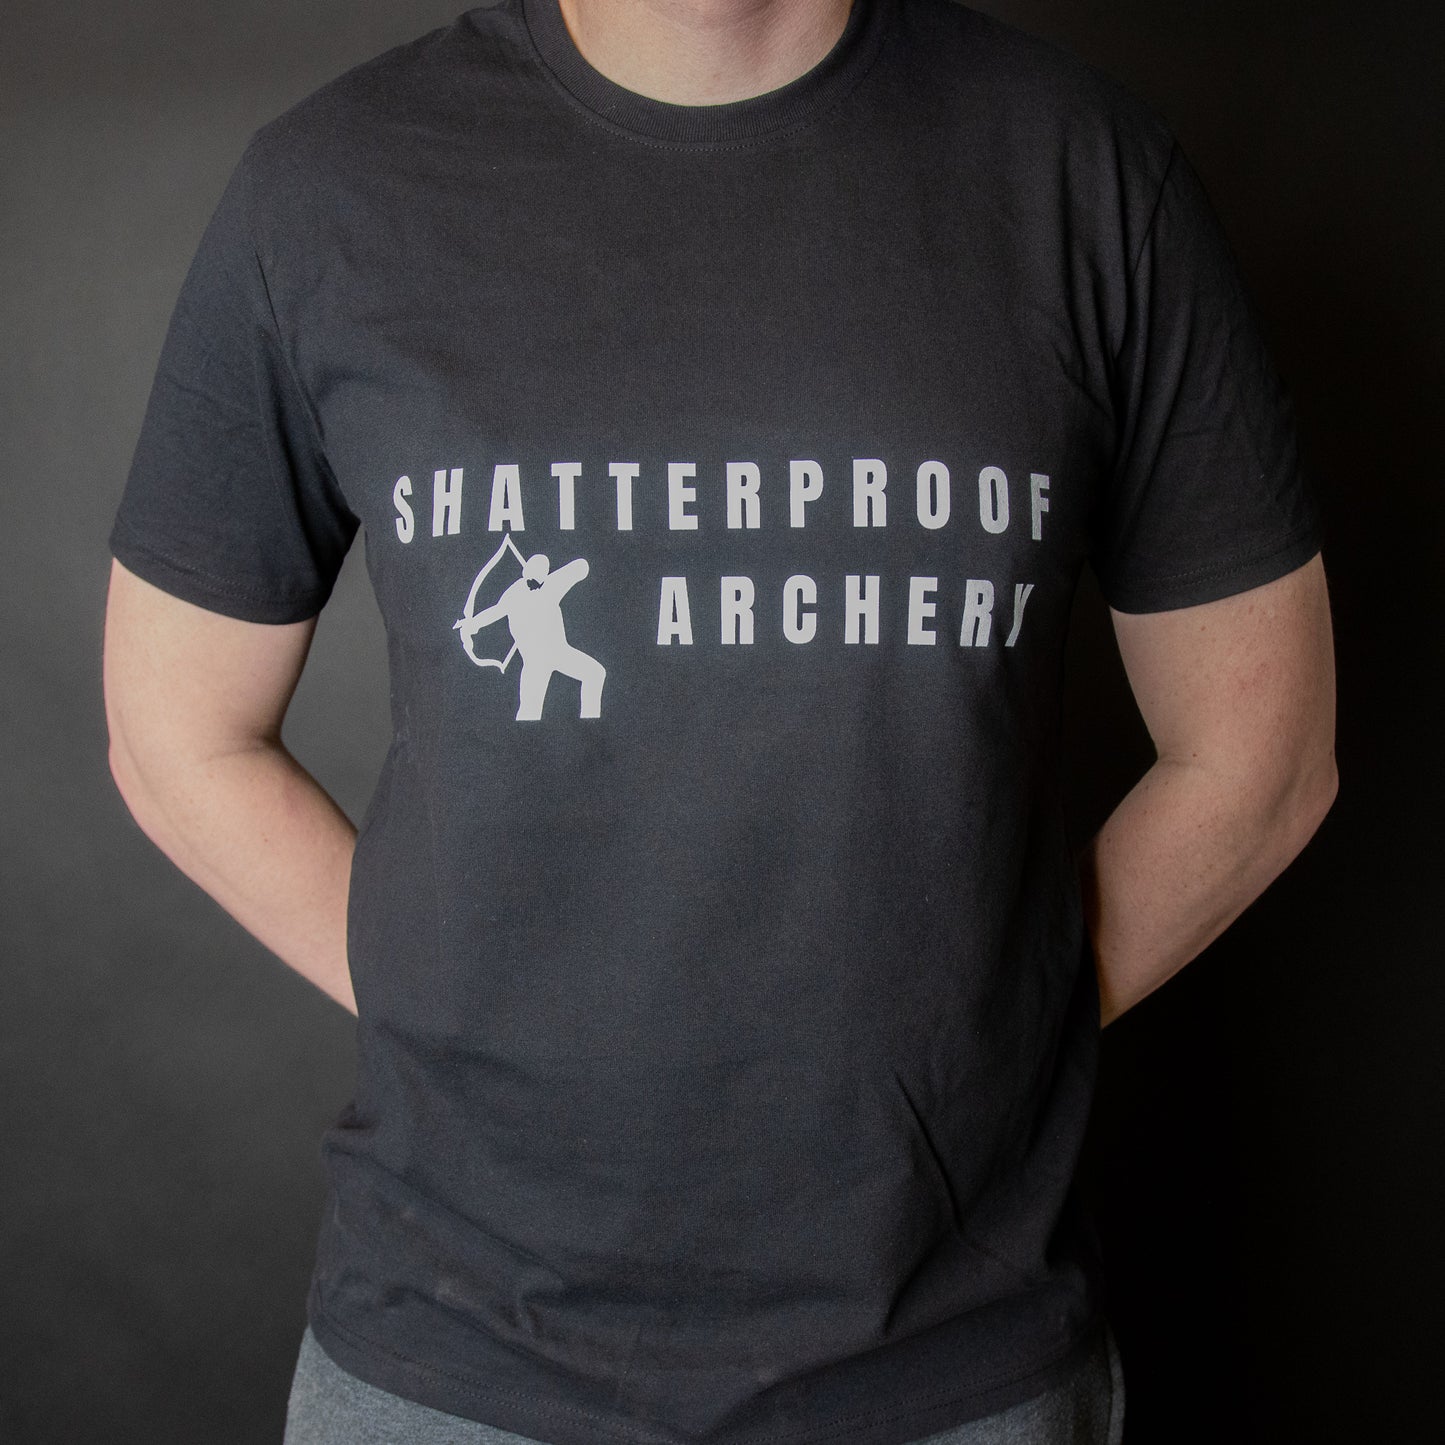 Shatterproof Archery T-Shirt